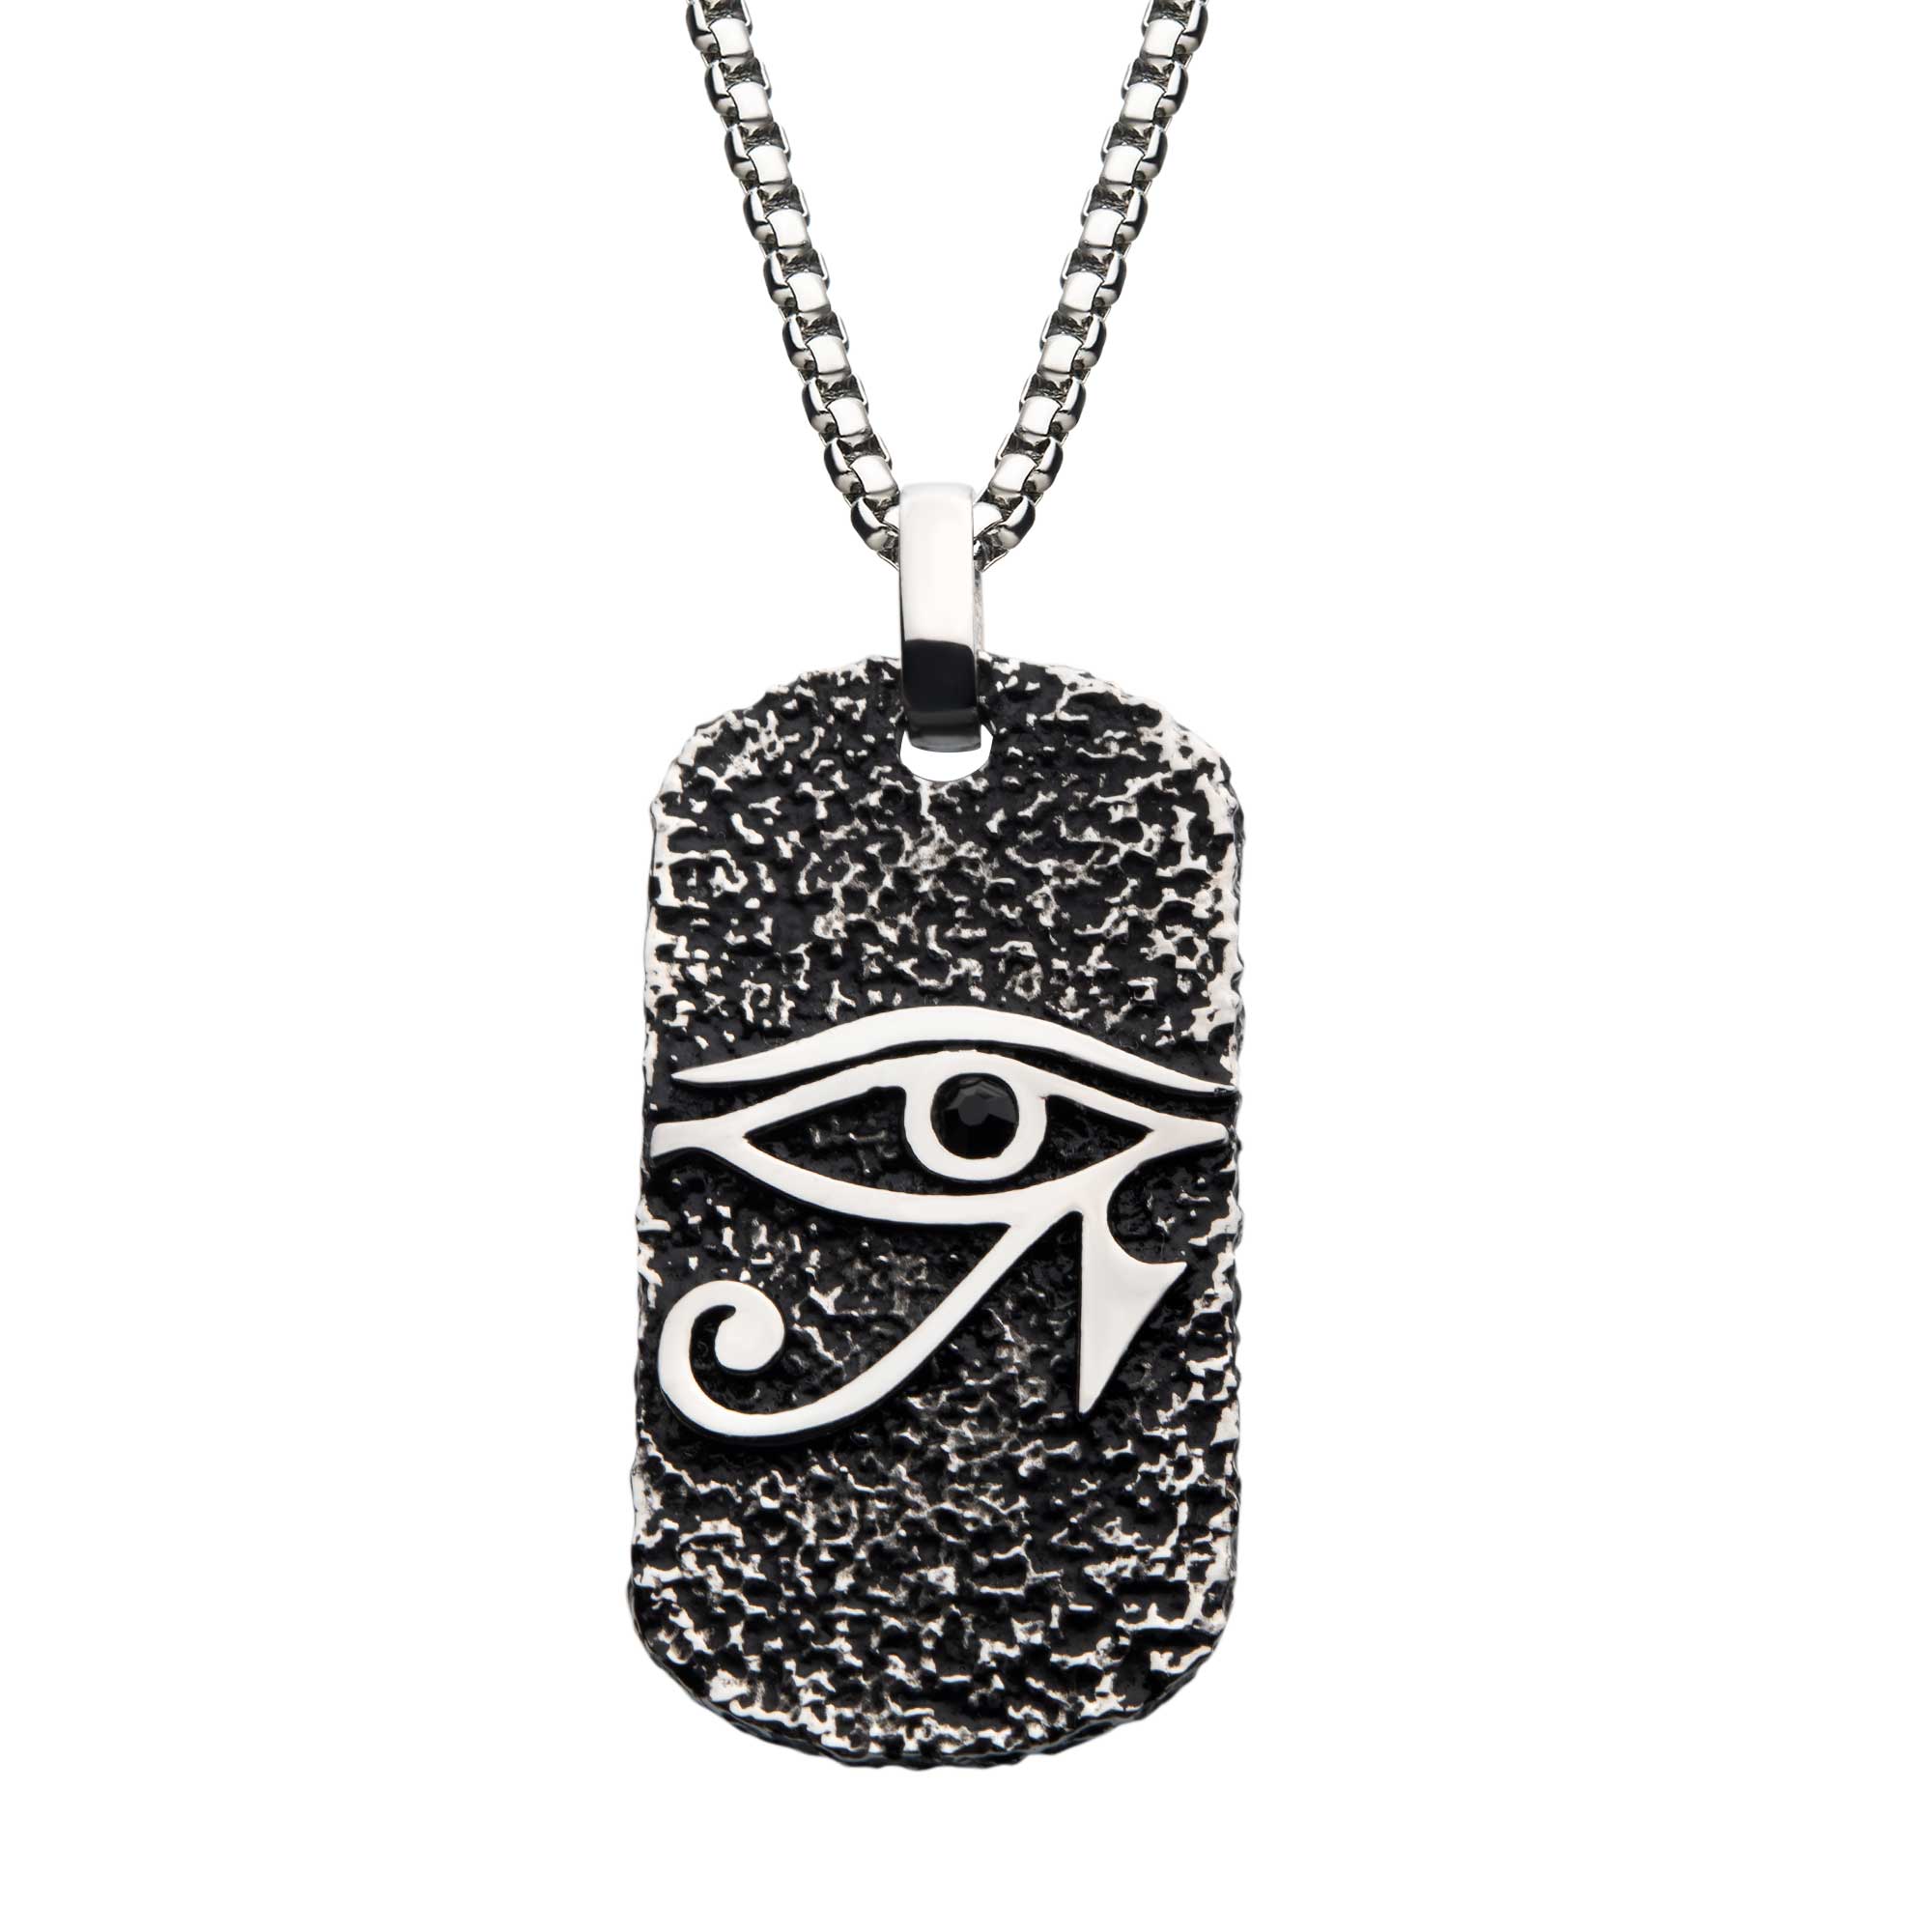 Black Oxidized Stainless Steel with Black CZ Eye of Horus Dog Tag Pendant, with Steel Box Chain Carroll / Ochs Jewelers Monroe, MI